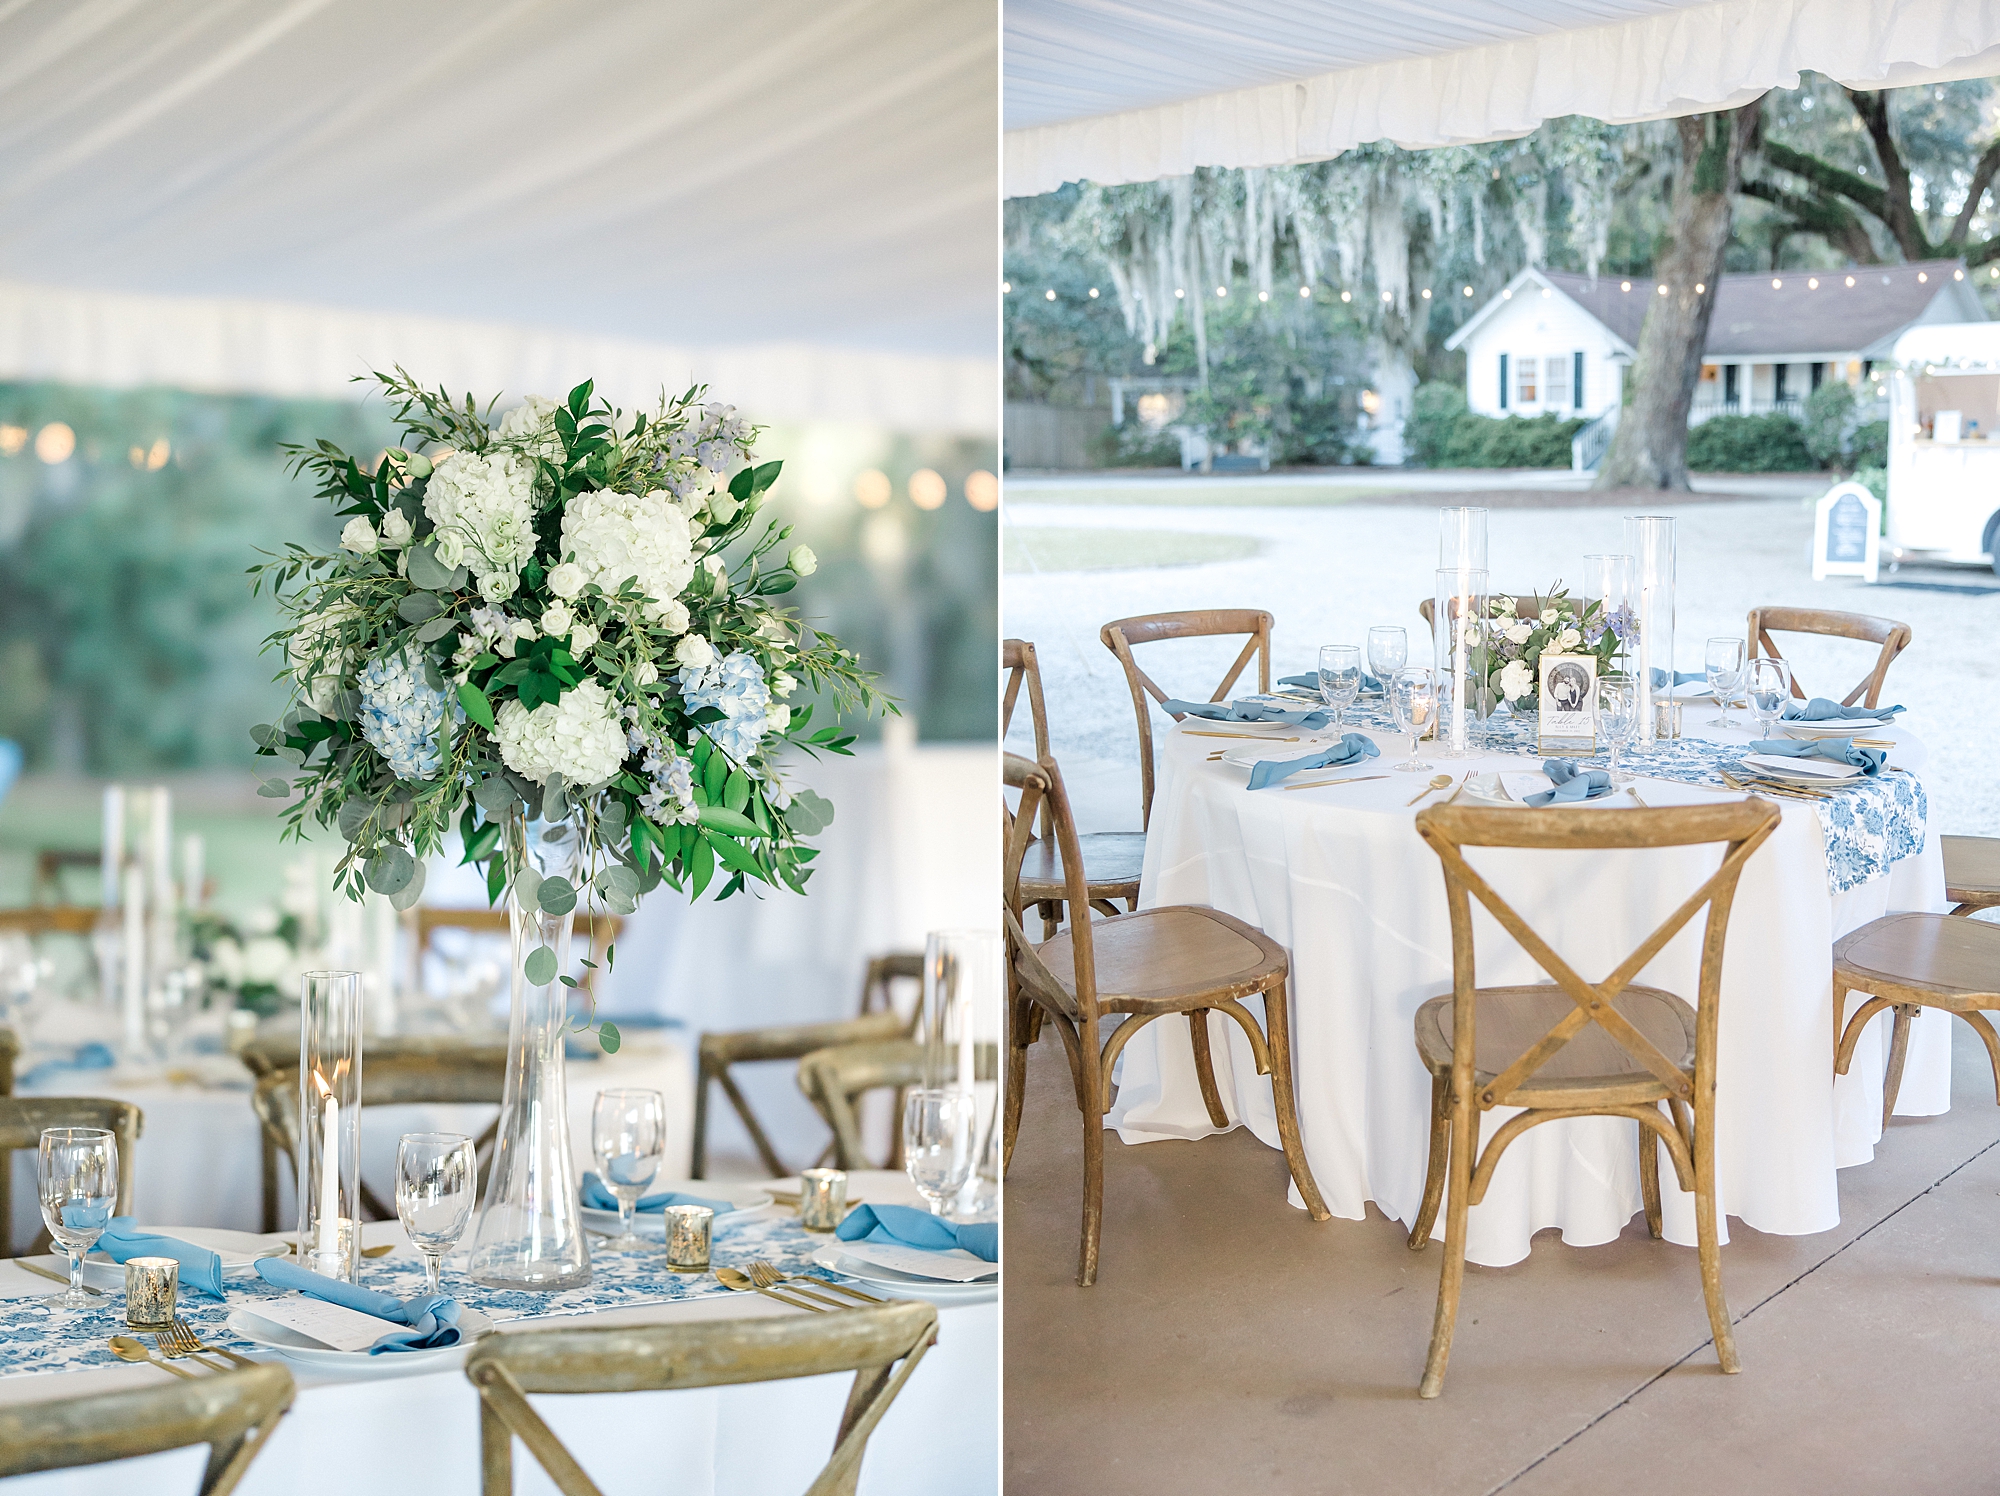 table setting from elegant wedding reception